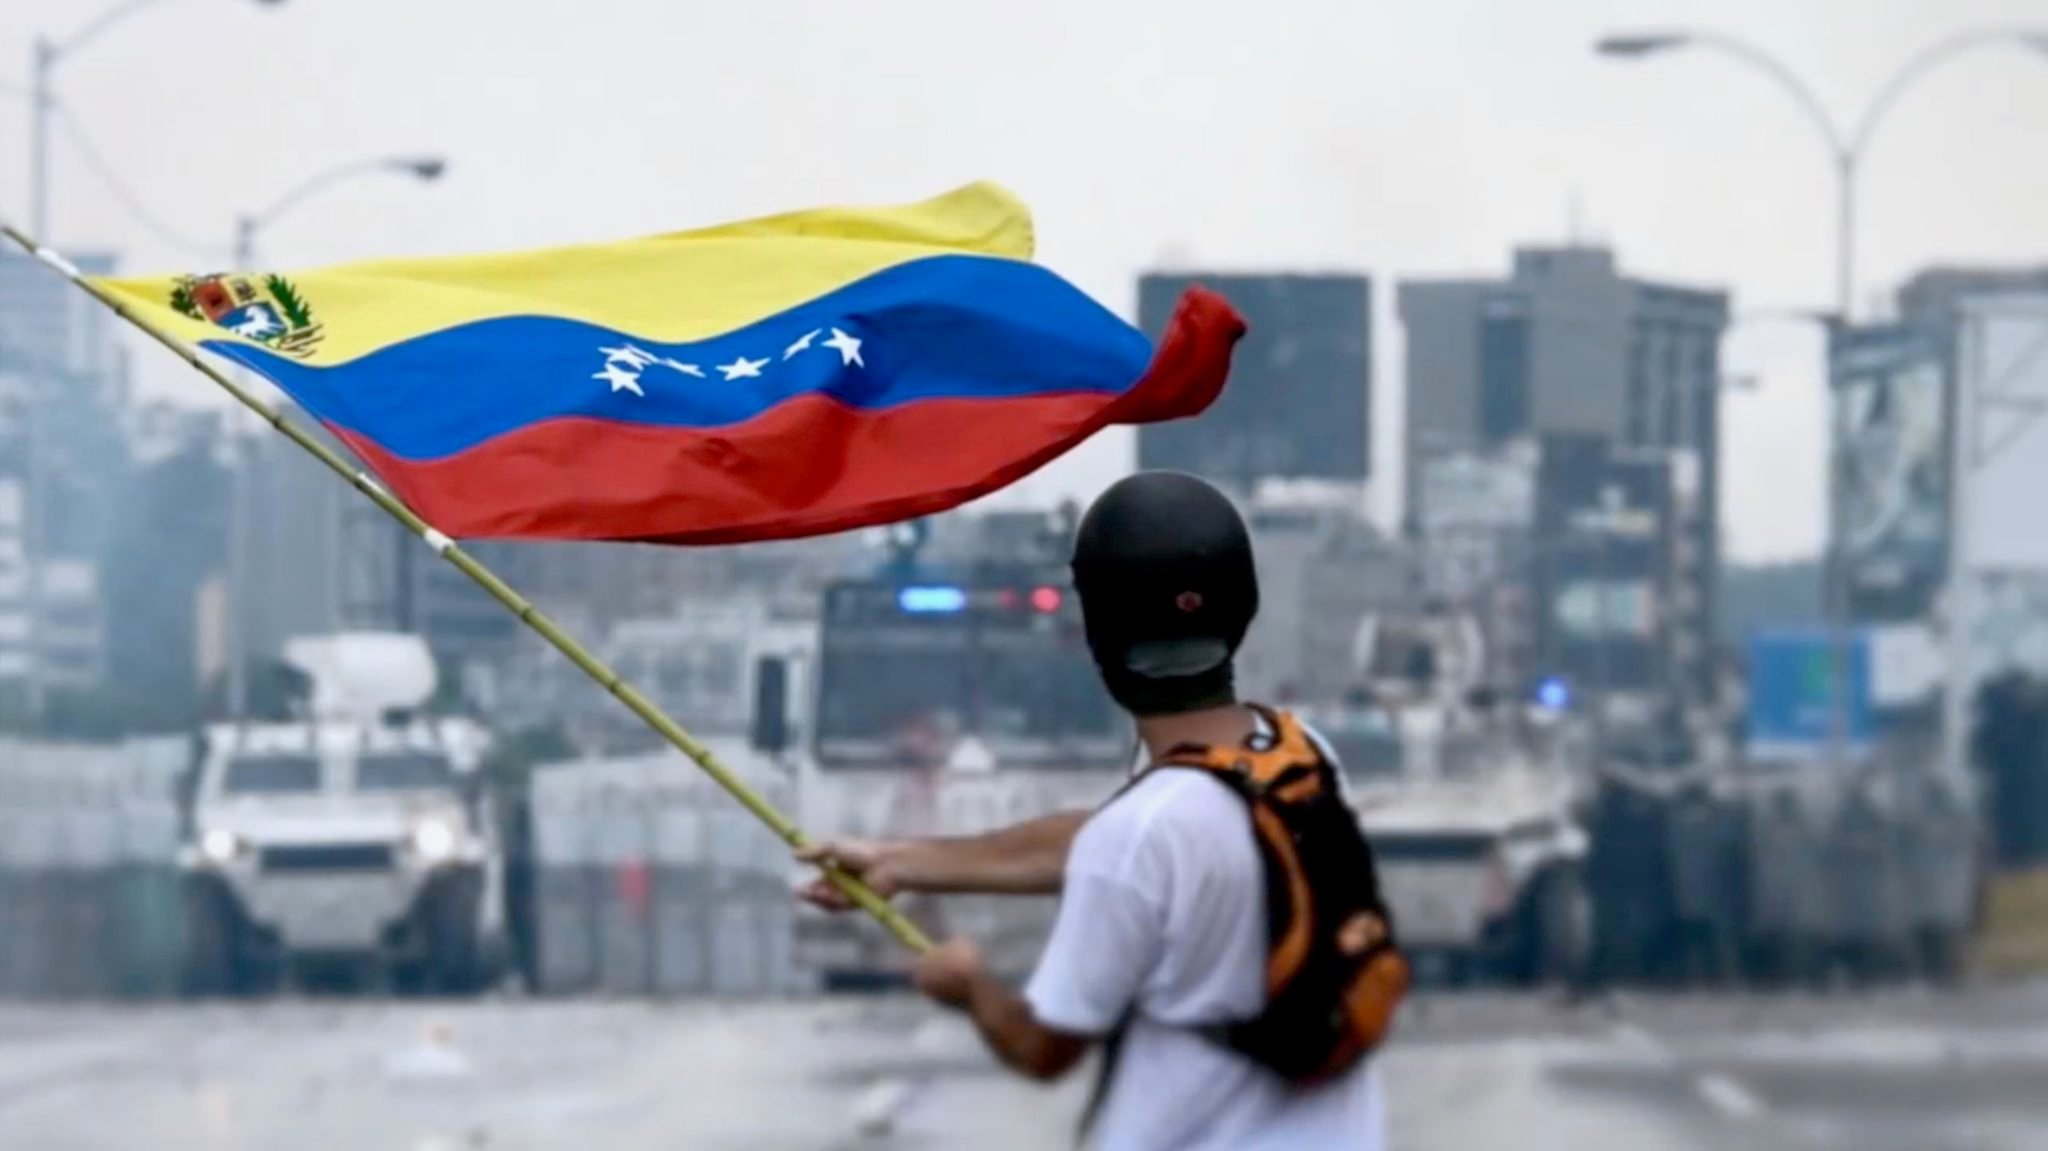 <p>Manifestante protesta contra governo da Venezuela (imagem: <a href="https://commons.wikimedia.org/wiki/File:2017_Venezuelan_protests_flag.jpg" target="_blank" rel="noopener">Efecto Eco </a>)</p>